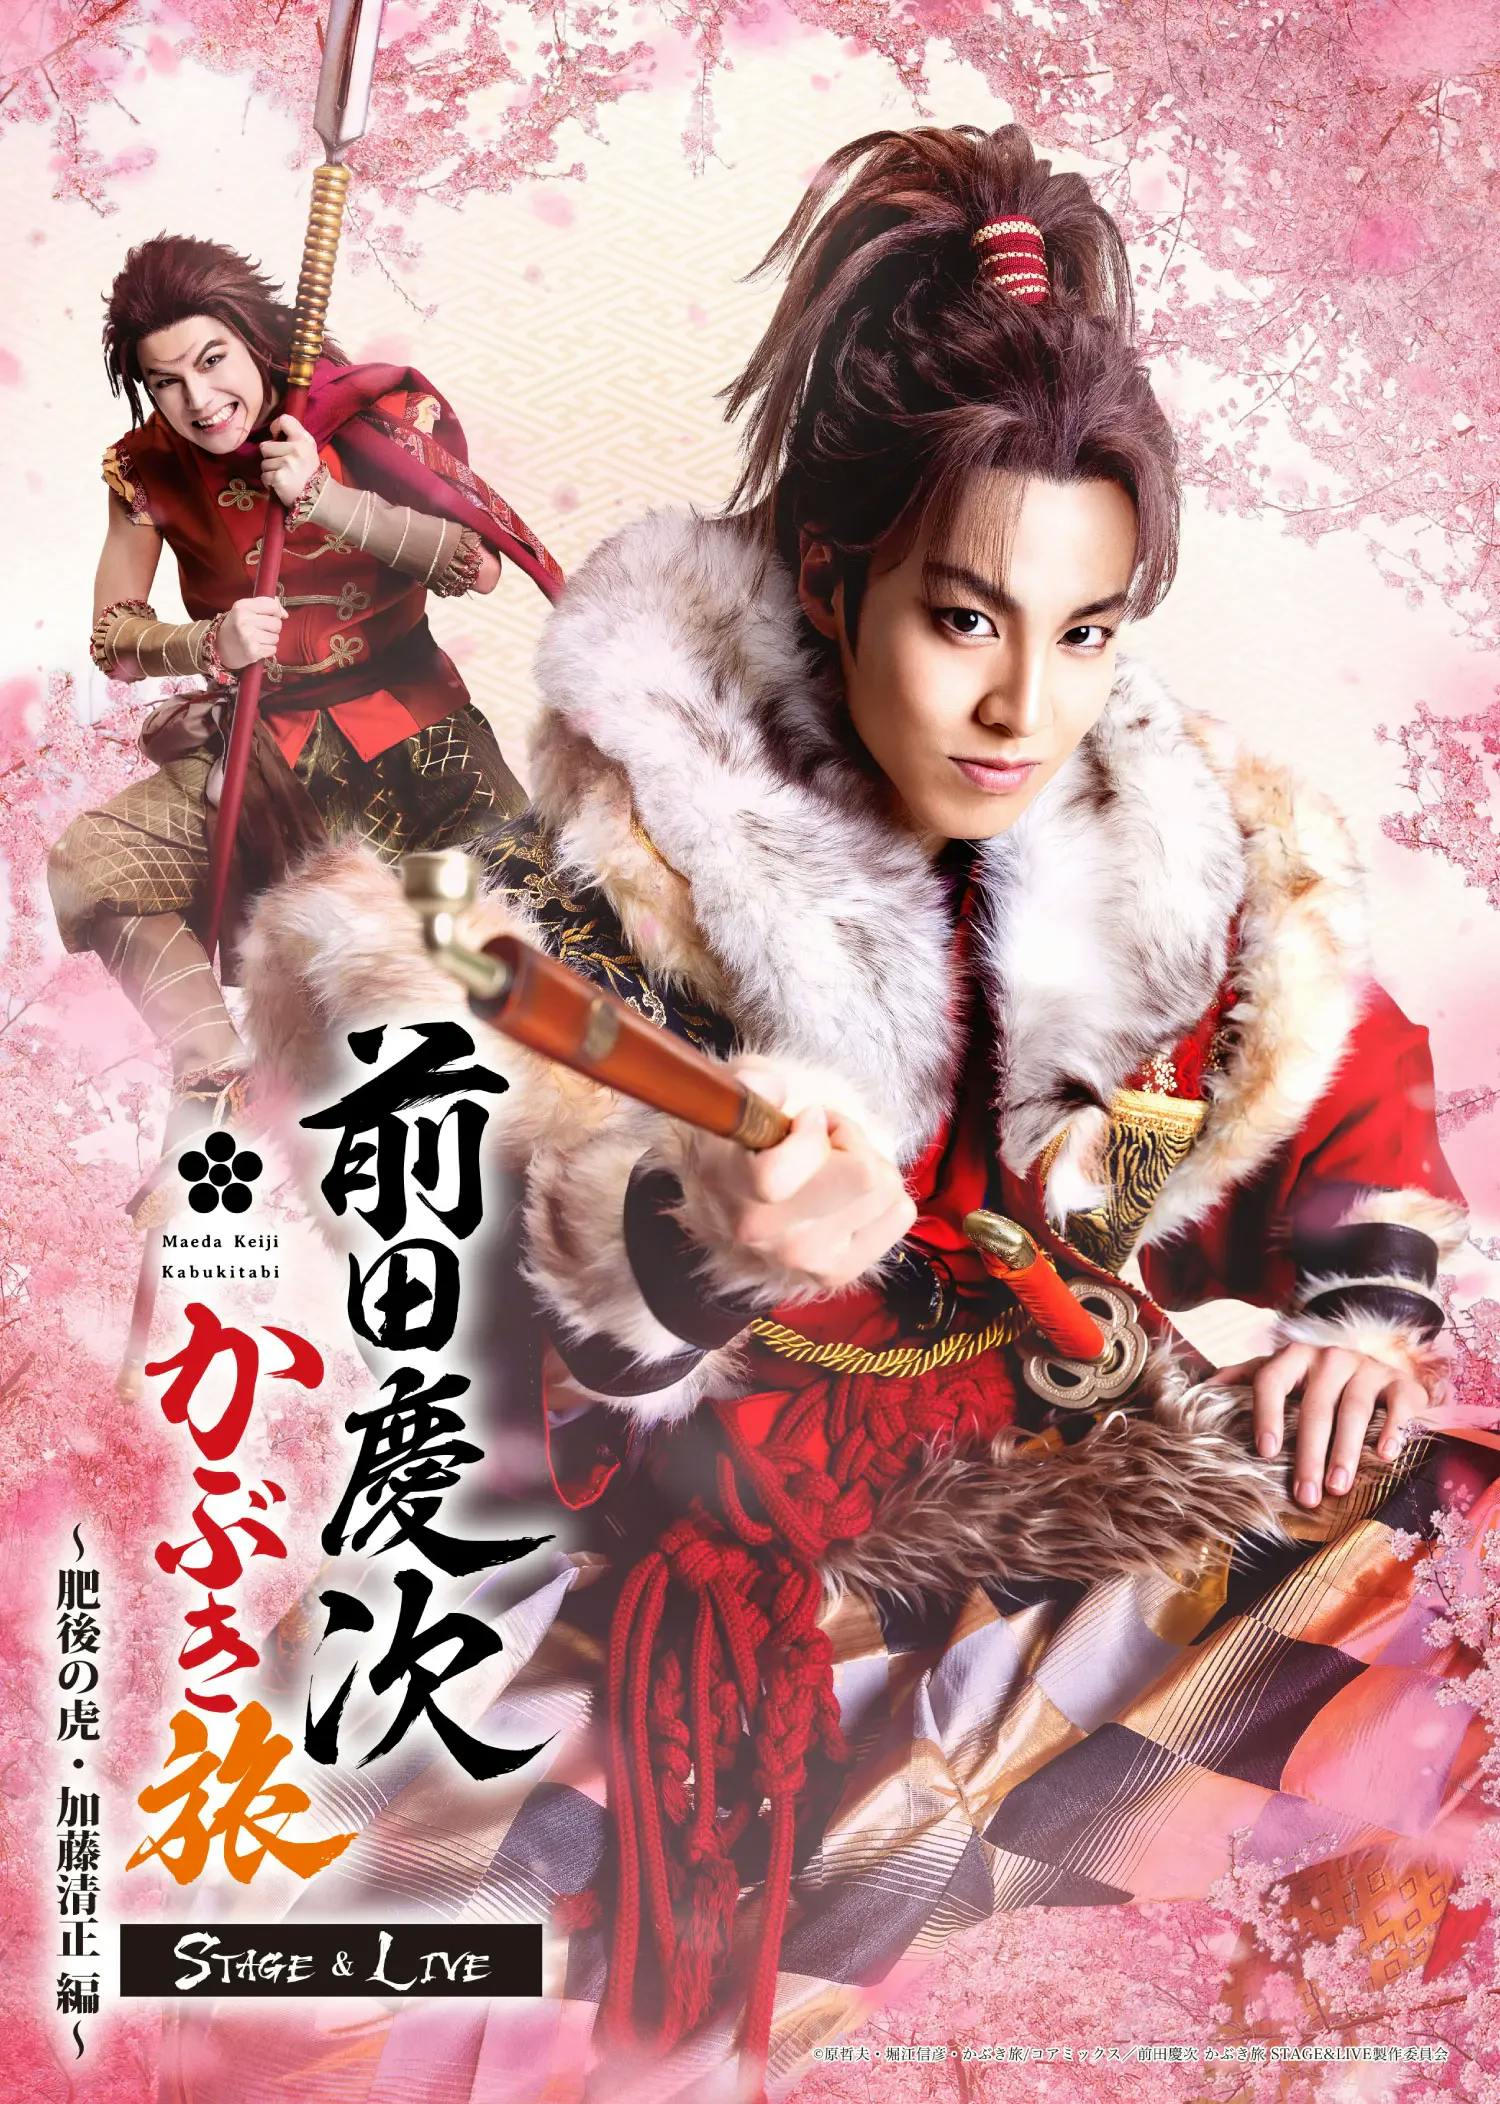 RIKU dari bintang “THE RAMPAGE”! “Keiji Maeda Kabuki Tabi STAGE&LIVE ~Higo Tora/Kato Kiyomasa Edition~” akan ditampilkan di Tokyo dan Osaka pada bulan September!